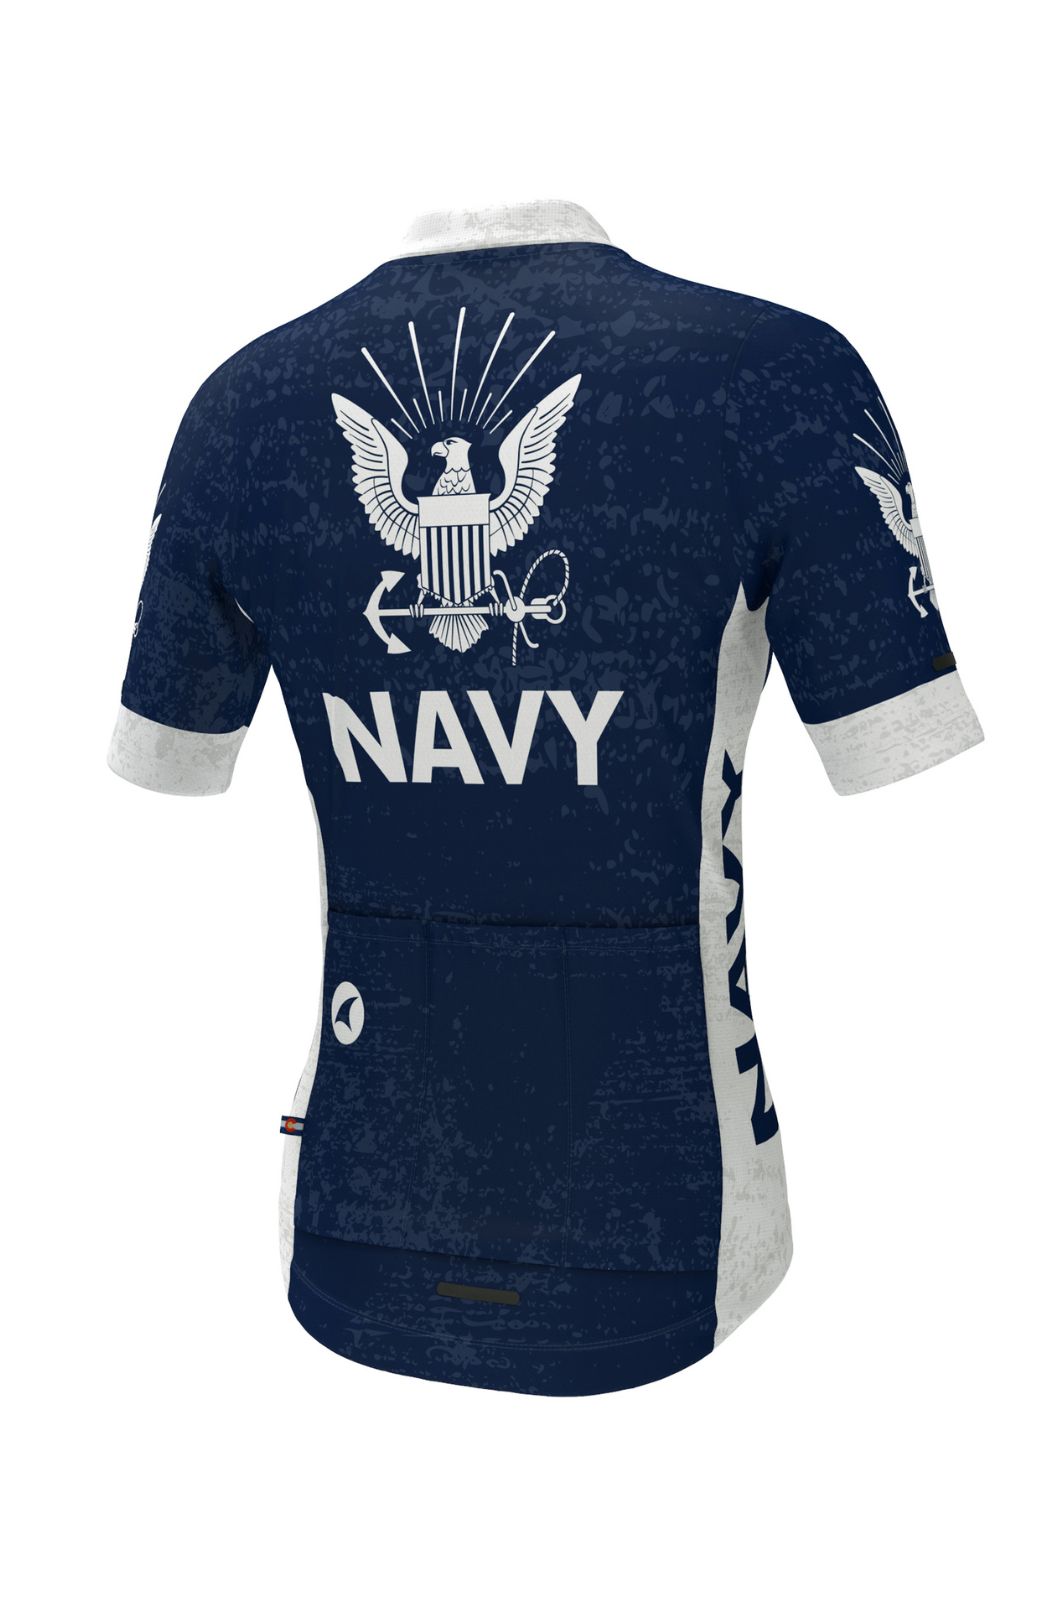 jersey design navy blue